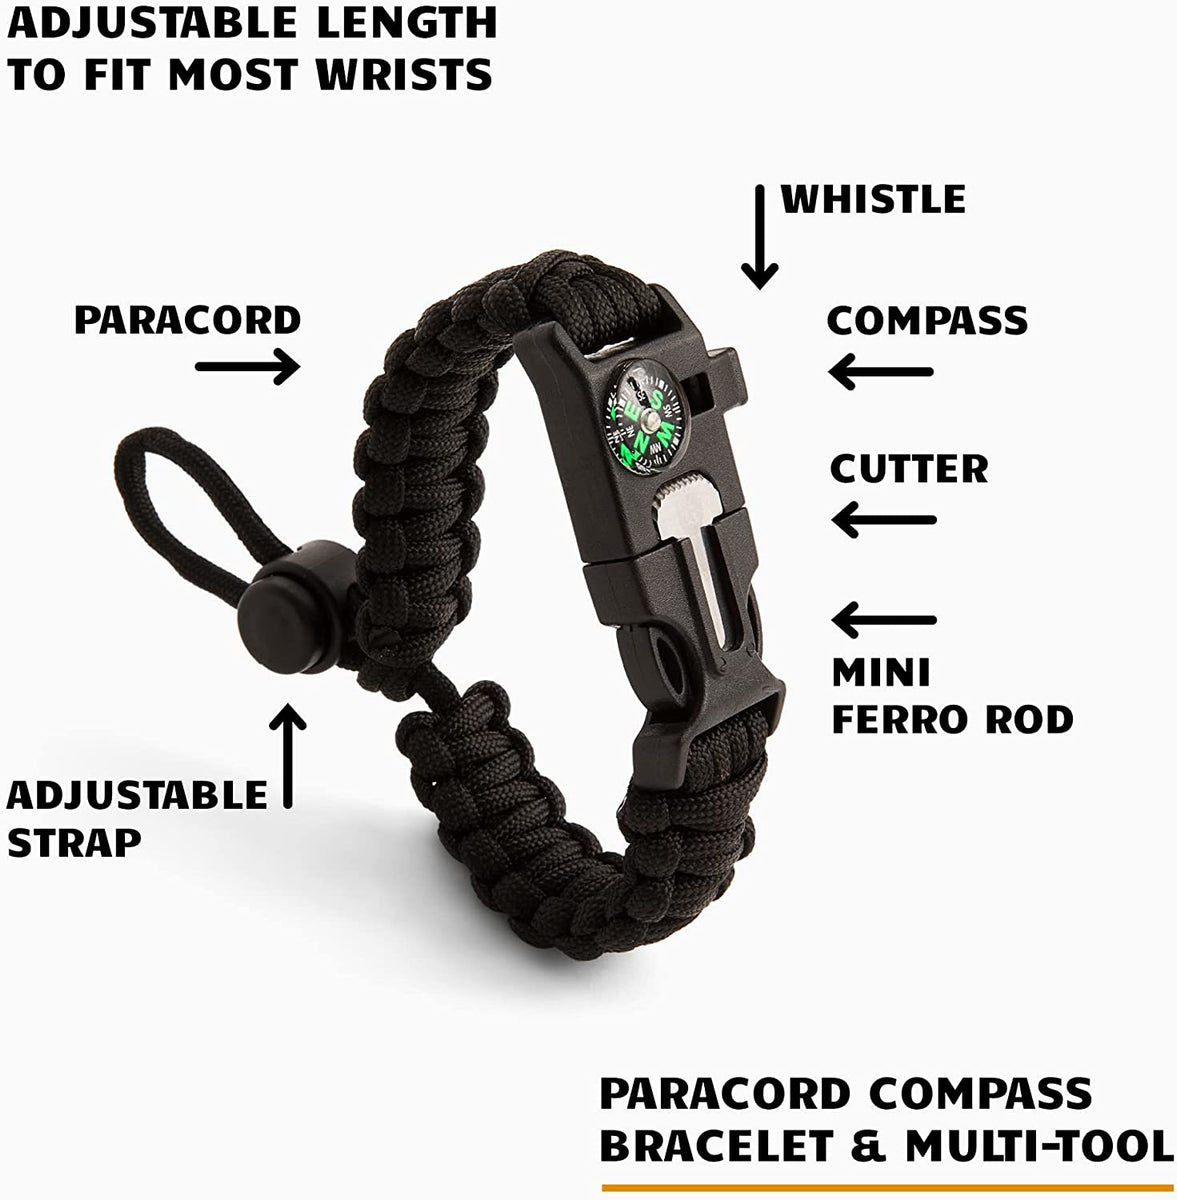 5 in 1 Adjustable Paracord Emergency Bracelet Fire Starter, Compass, Whistle, and More, Women's, Size: 1 Black Bracelet